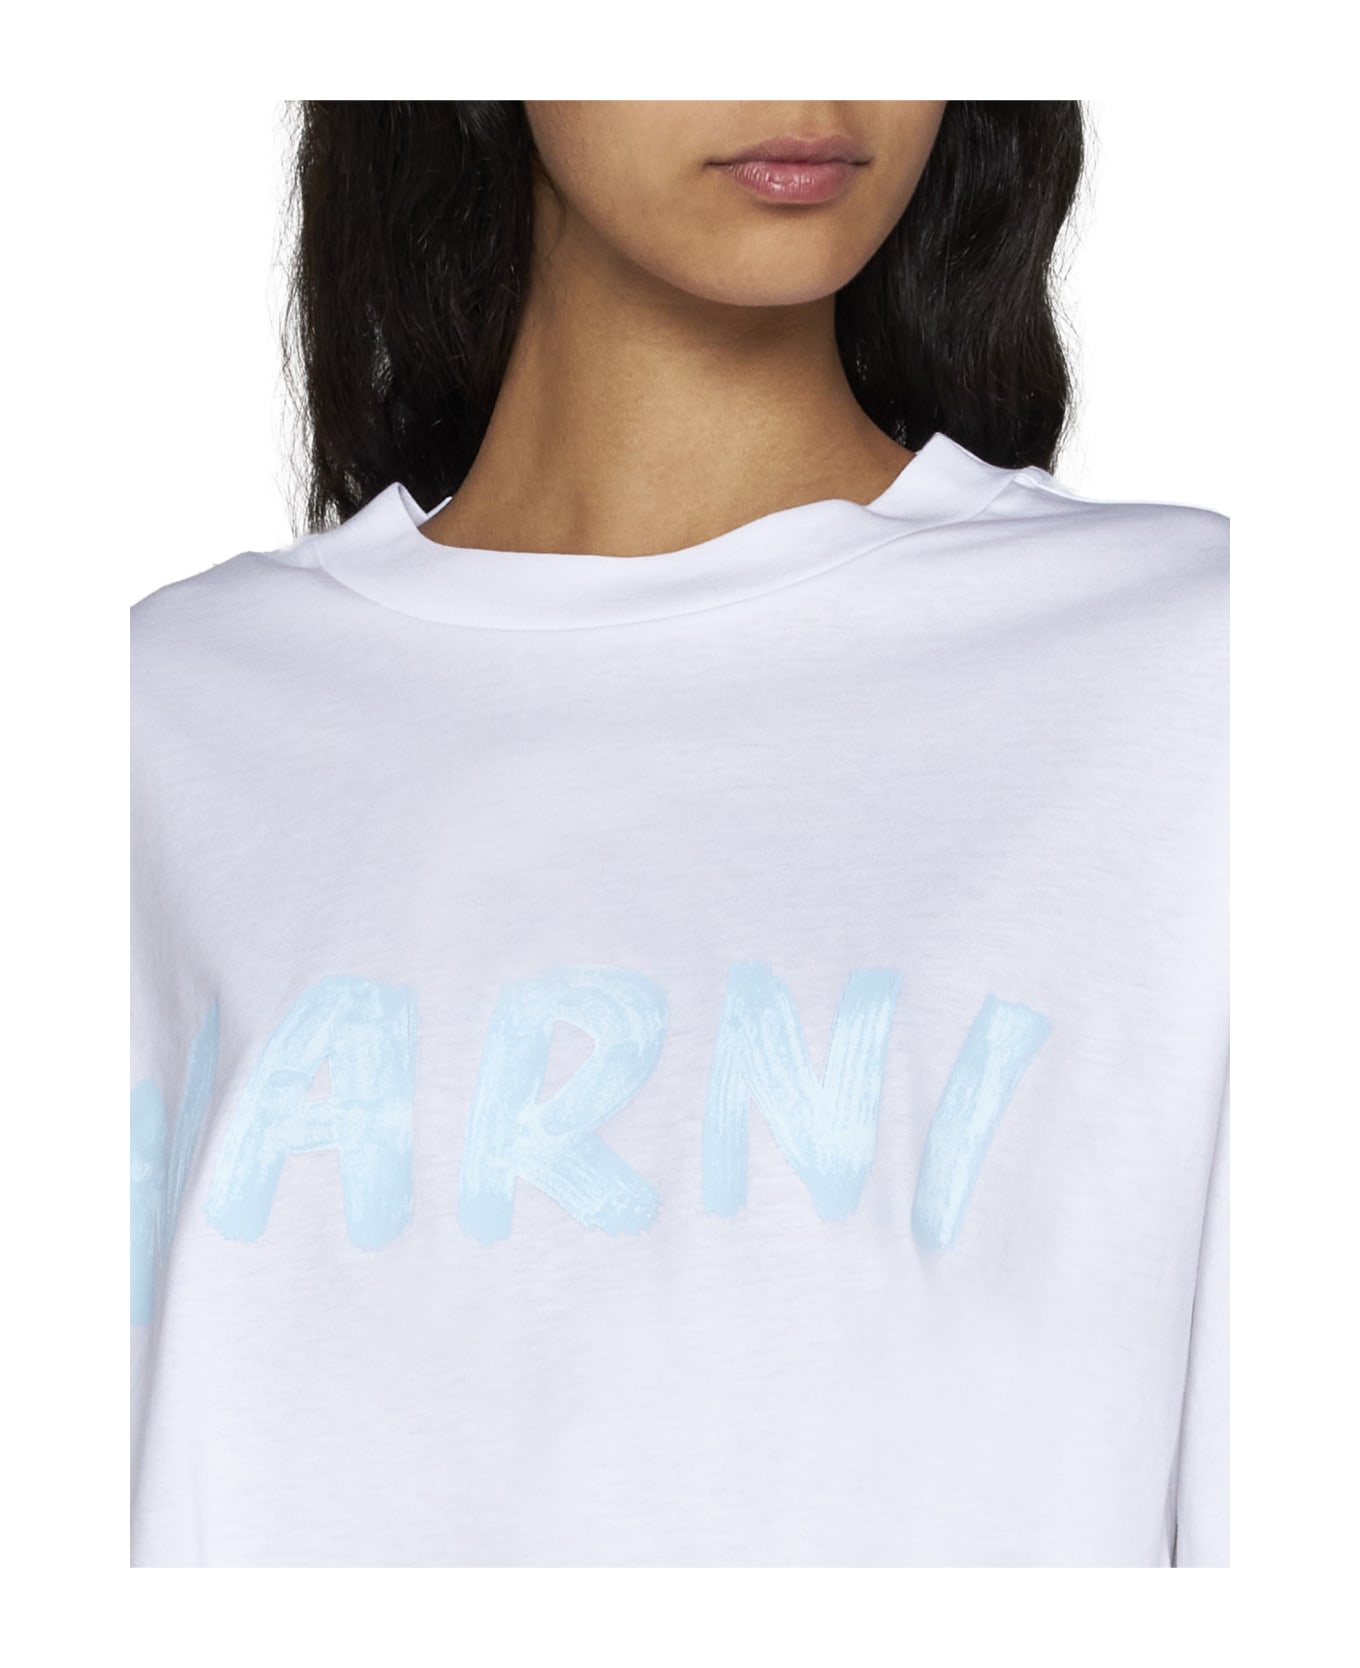 Marni T-Shirt - Lily white Tシャツ